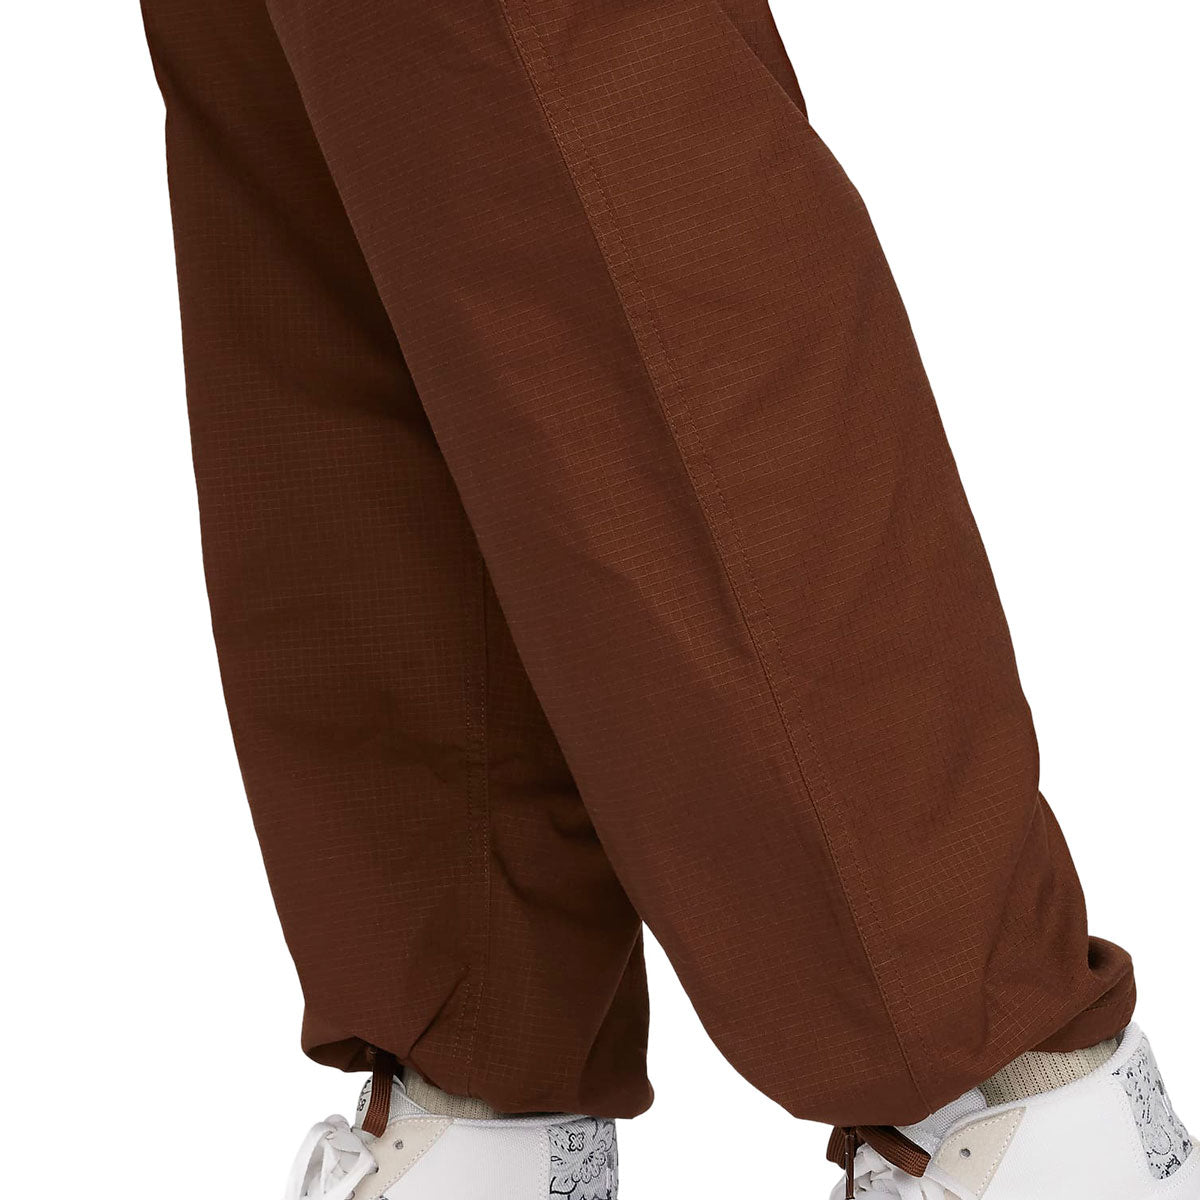 Nike SB Kearny Cargo Pants - Cacao Wow image 5